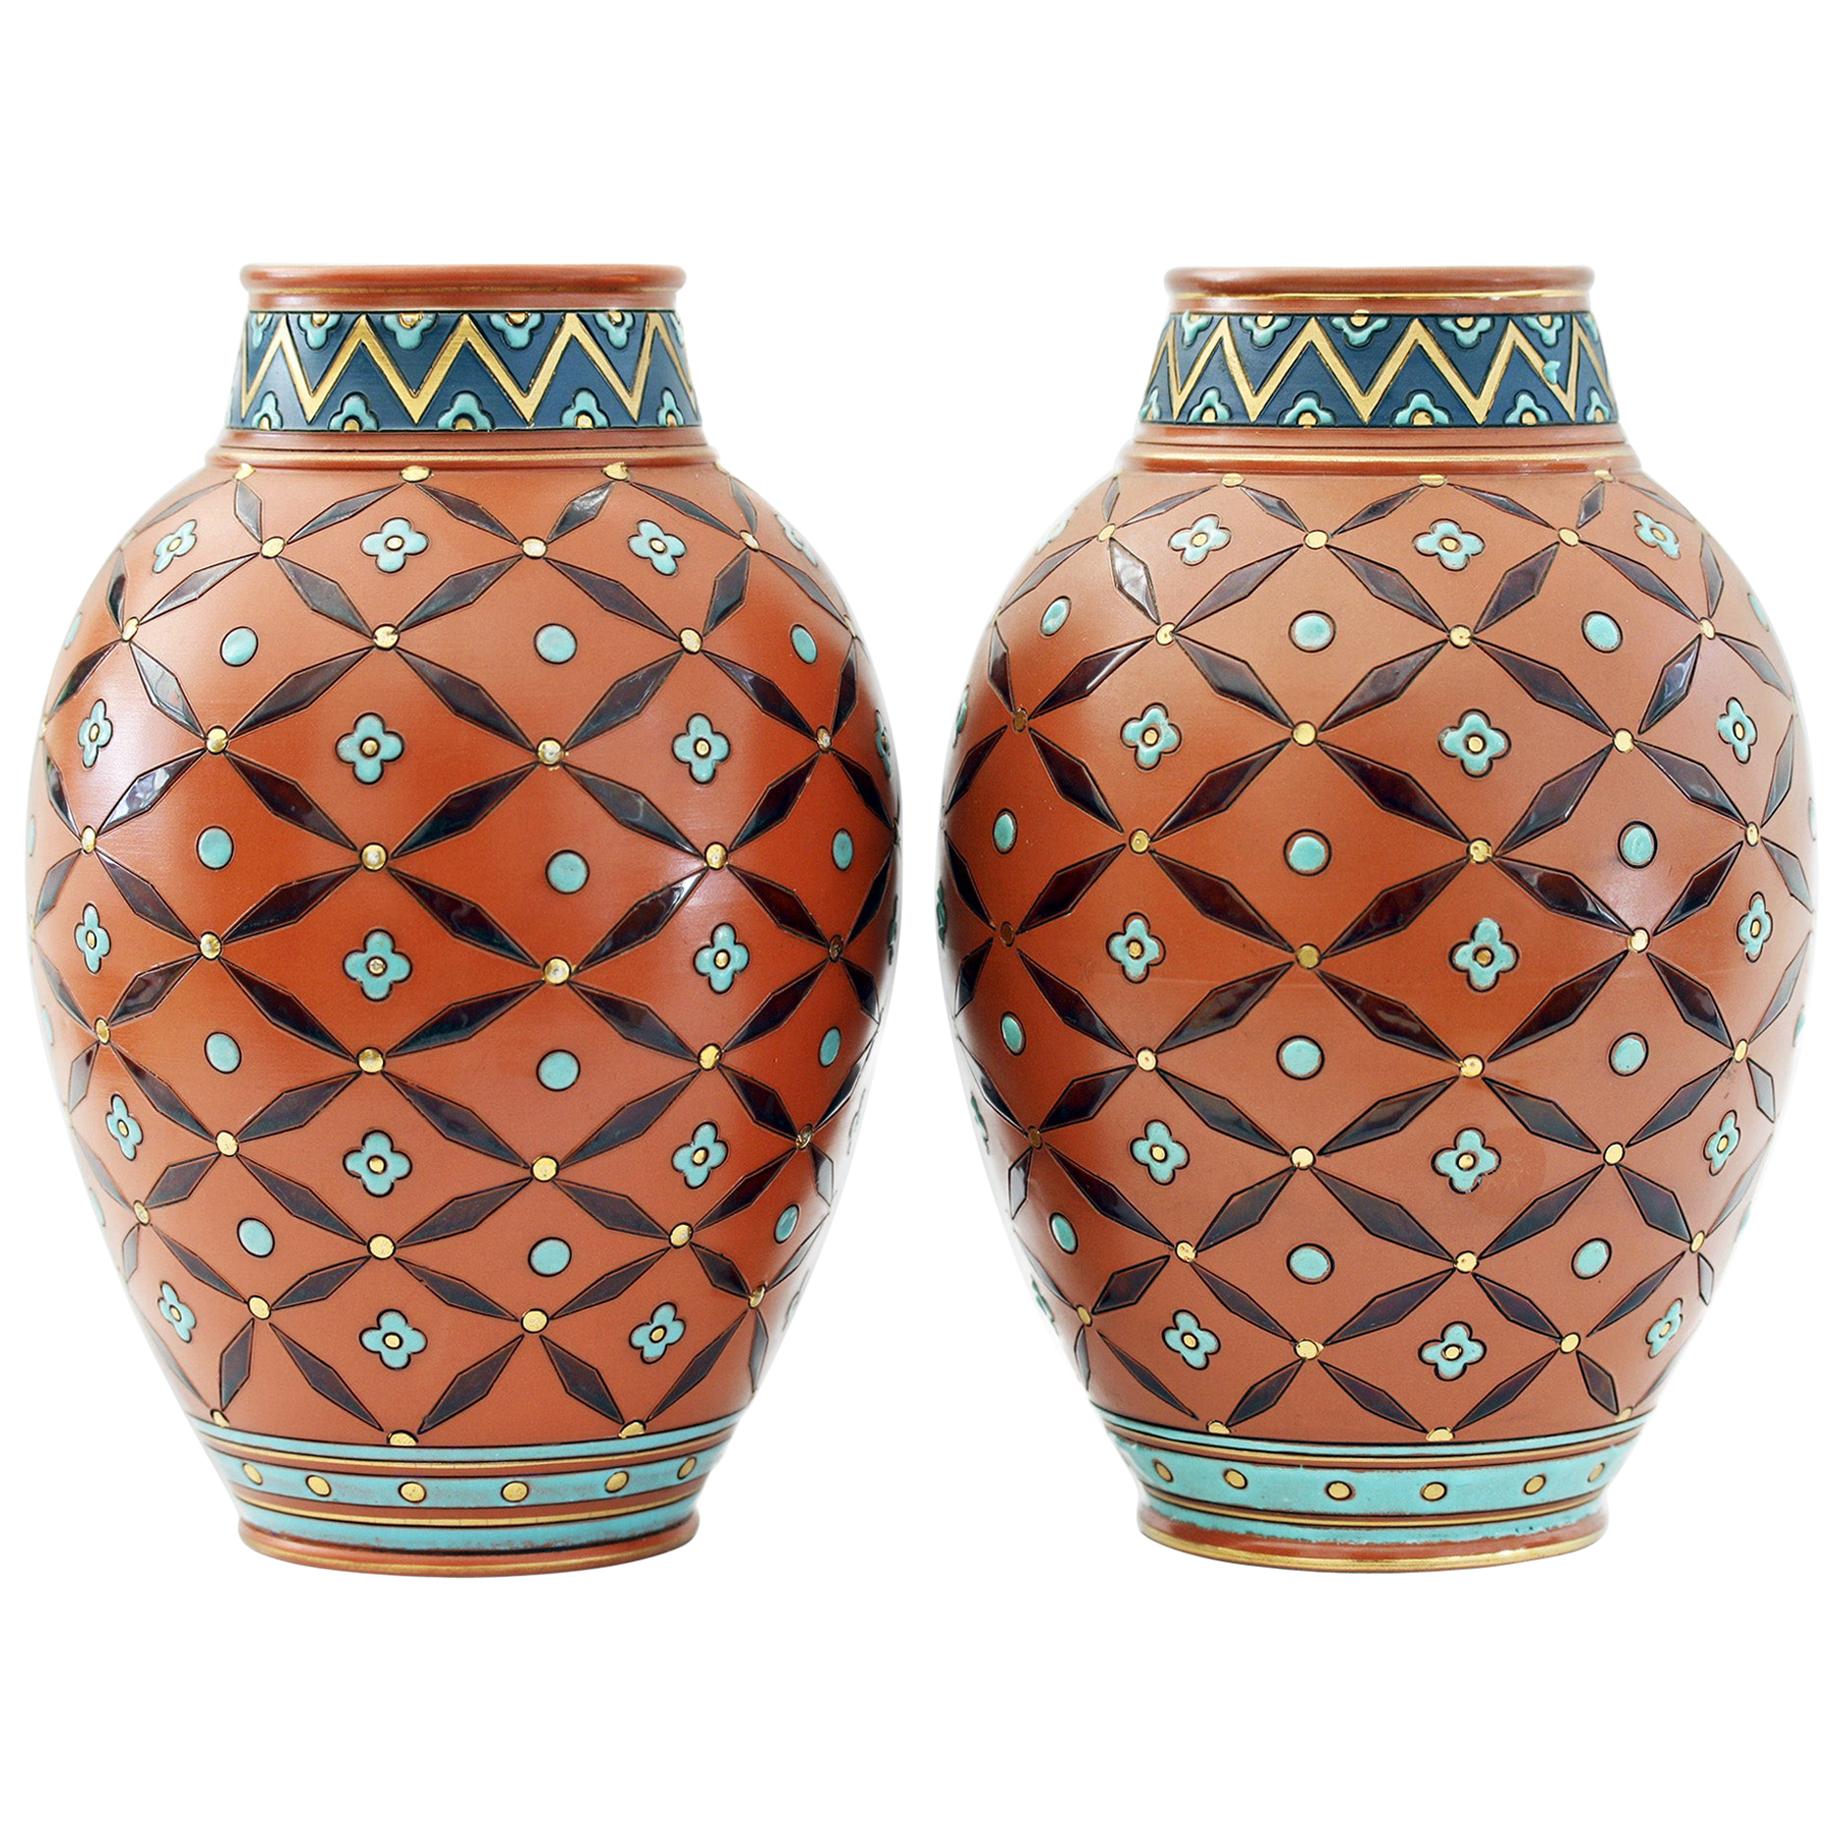 Hans Christiansen Pair of Villeroy & Boch Gothic Revival Vases, circa 1900